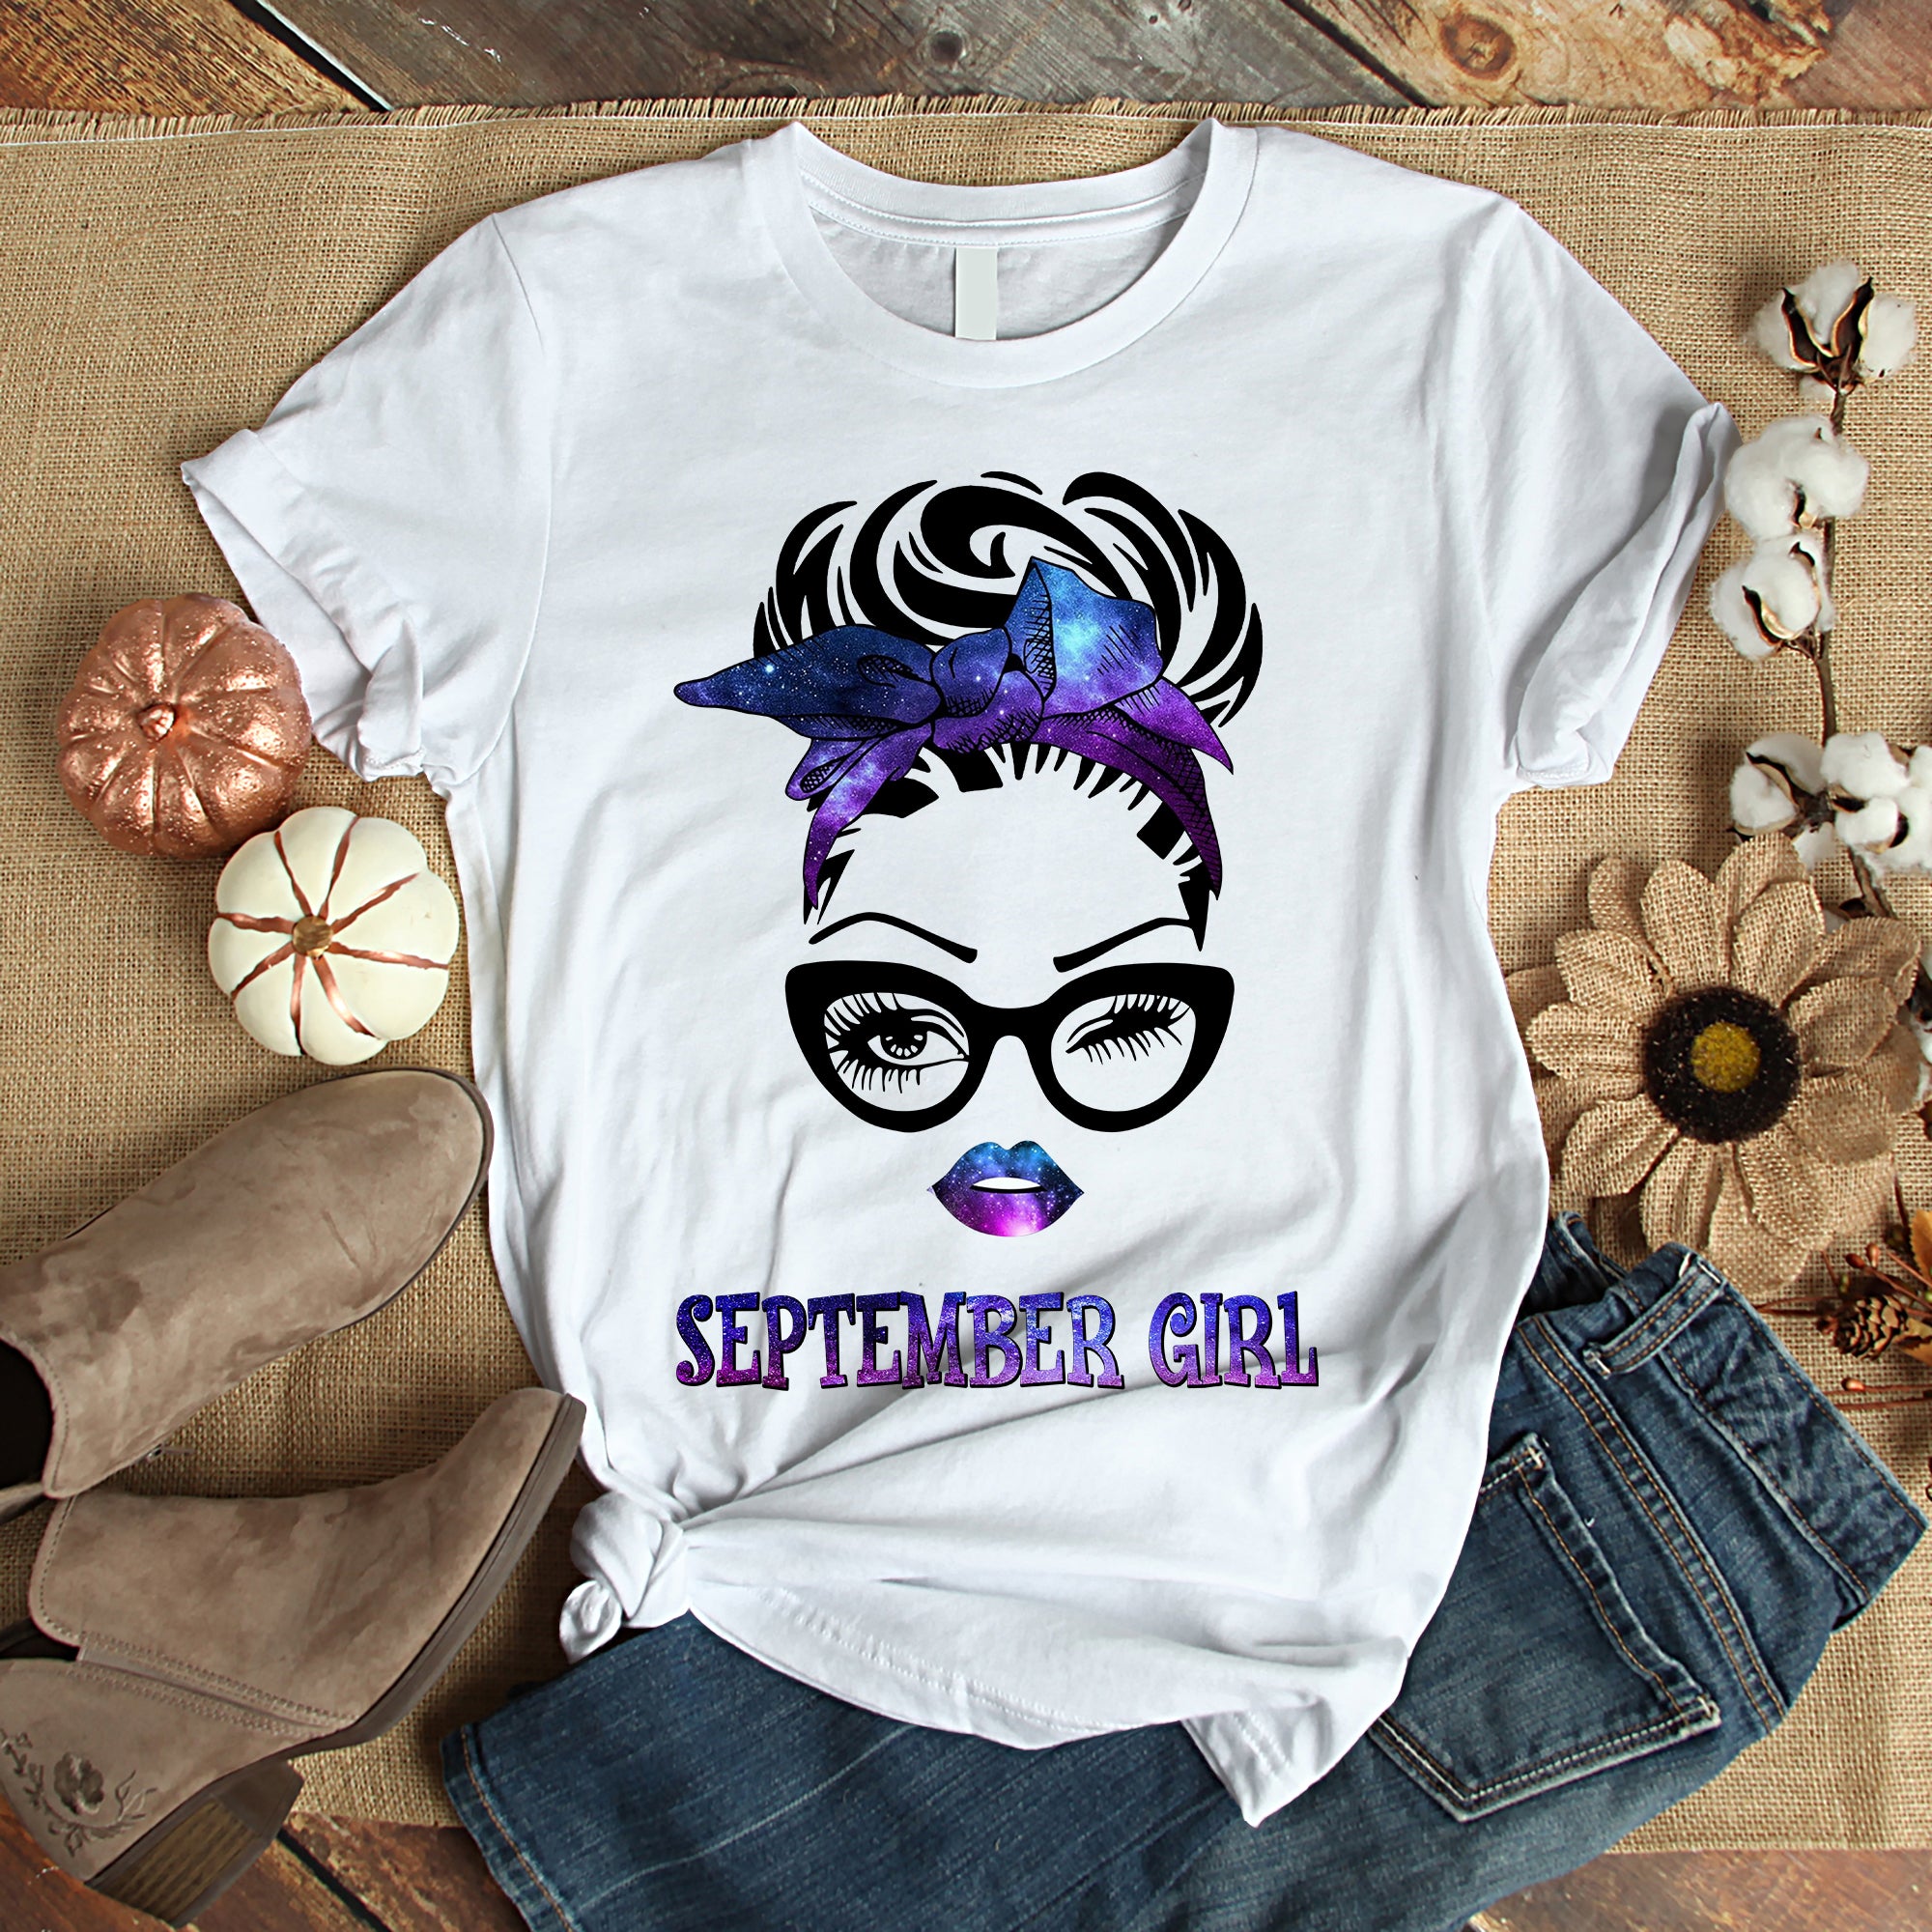 September Girl Birthday Shirt For Women, Girls, Sisters. Happy Birthday T-Shirt